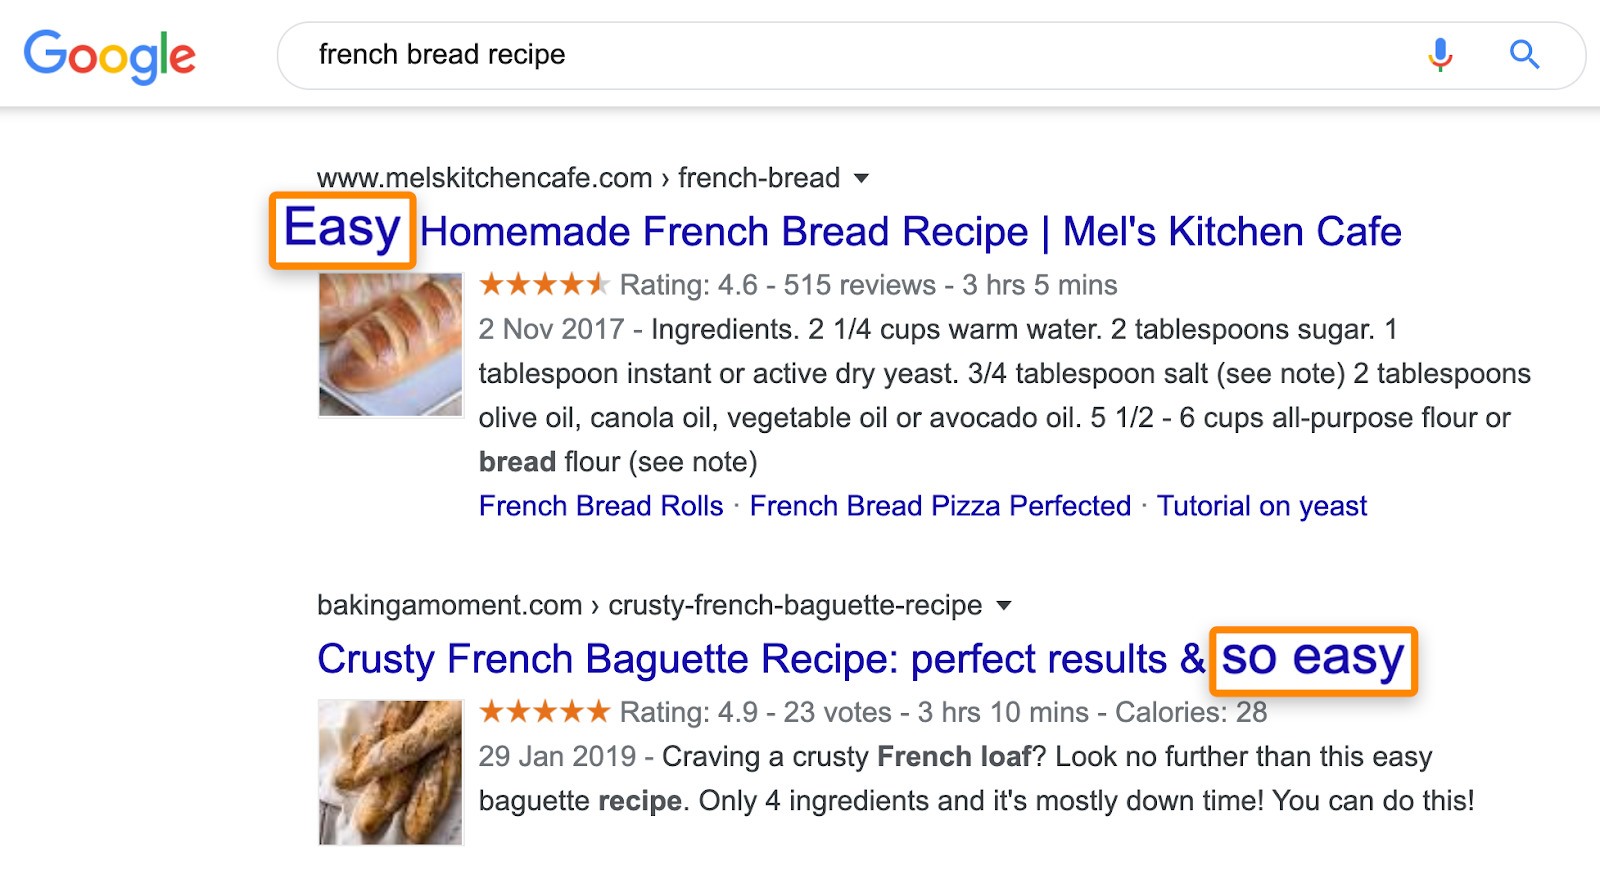 14 french bread recipe results